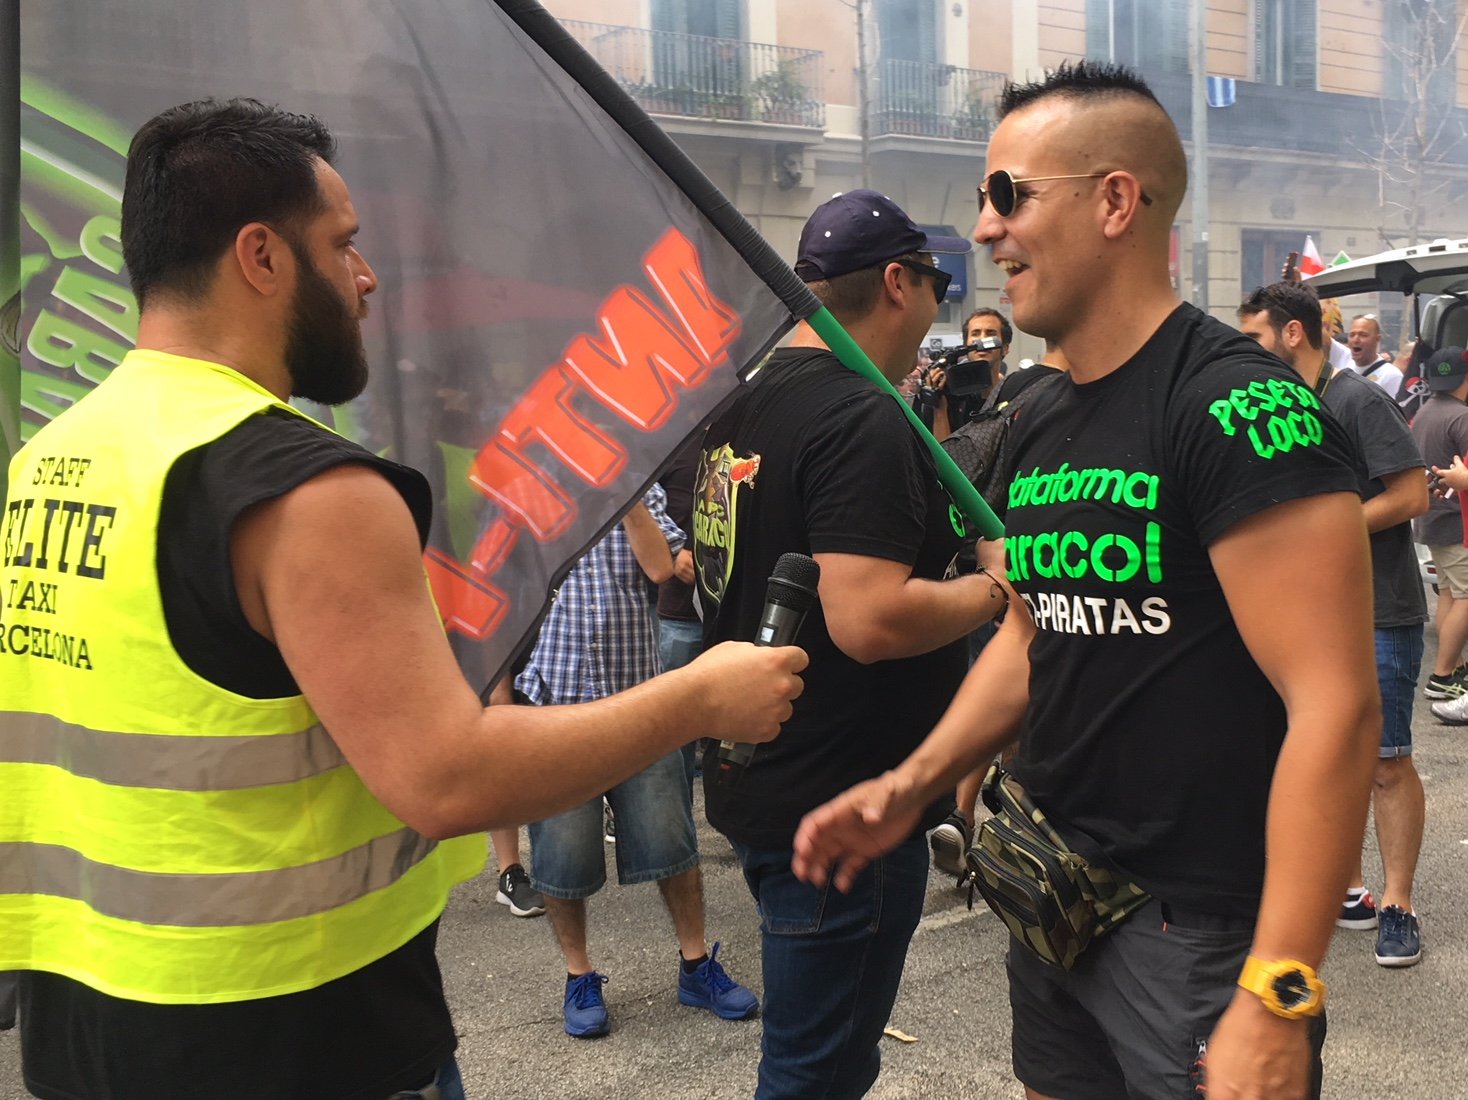 El polèmic líder del taxi madrileny, Peseto Loco, agita la manifestació